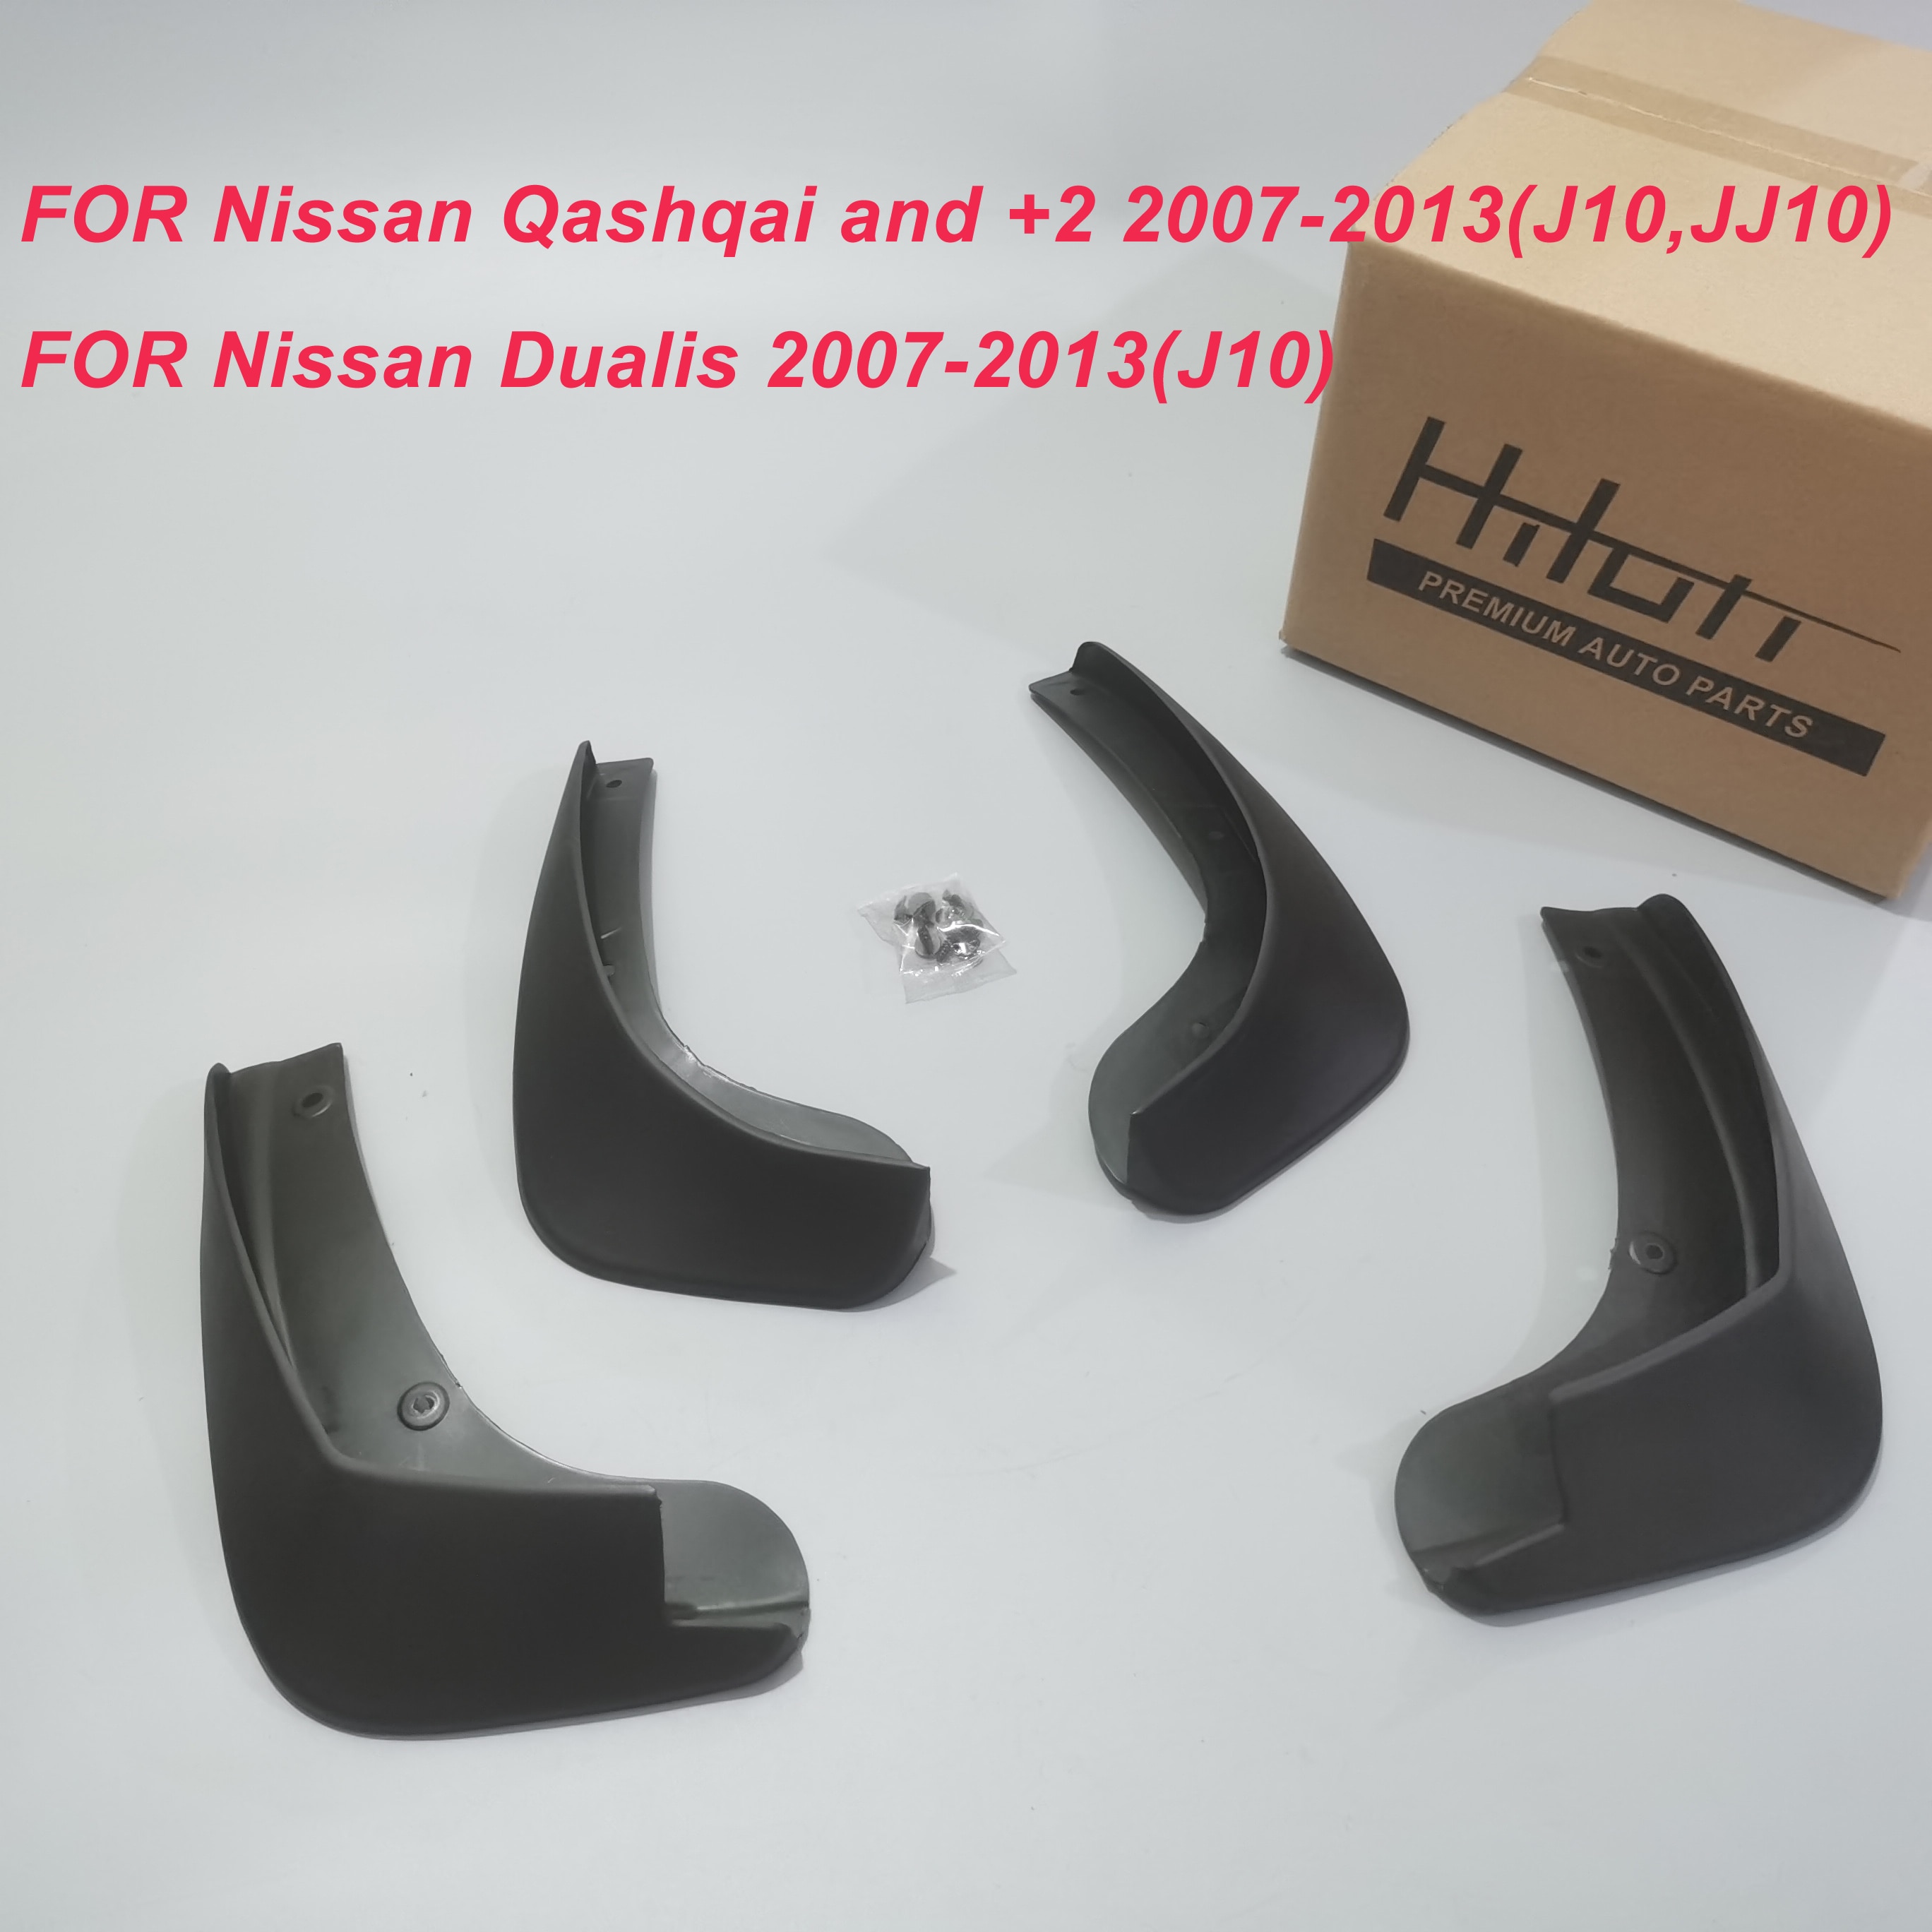 Auto Spatlappen Voor Nissan Qashqai + 2 Dualis J10 2007 Spatlappen Splash guards Spatlappen Spatborden